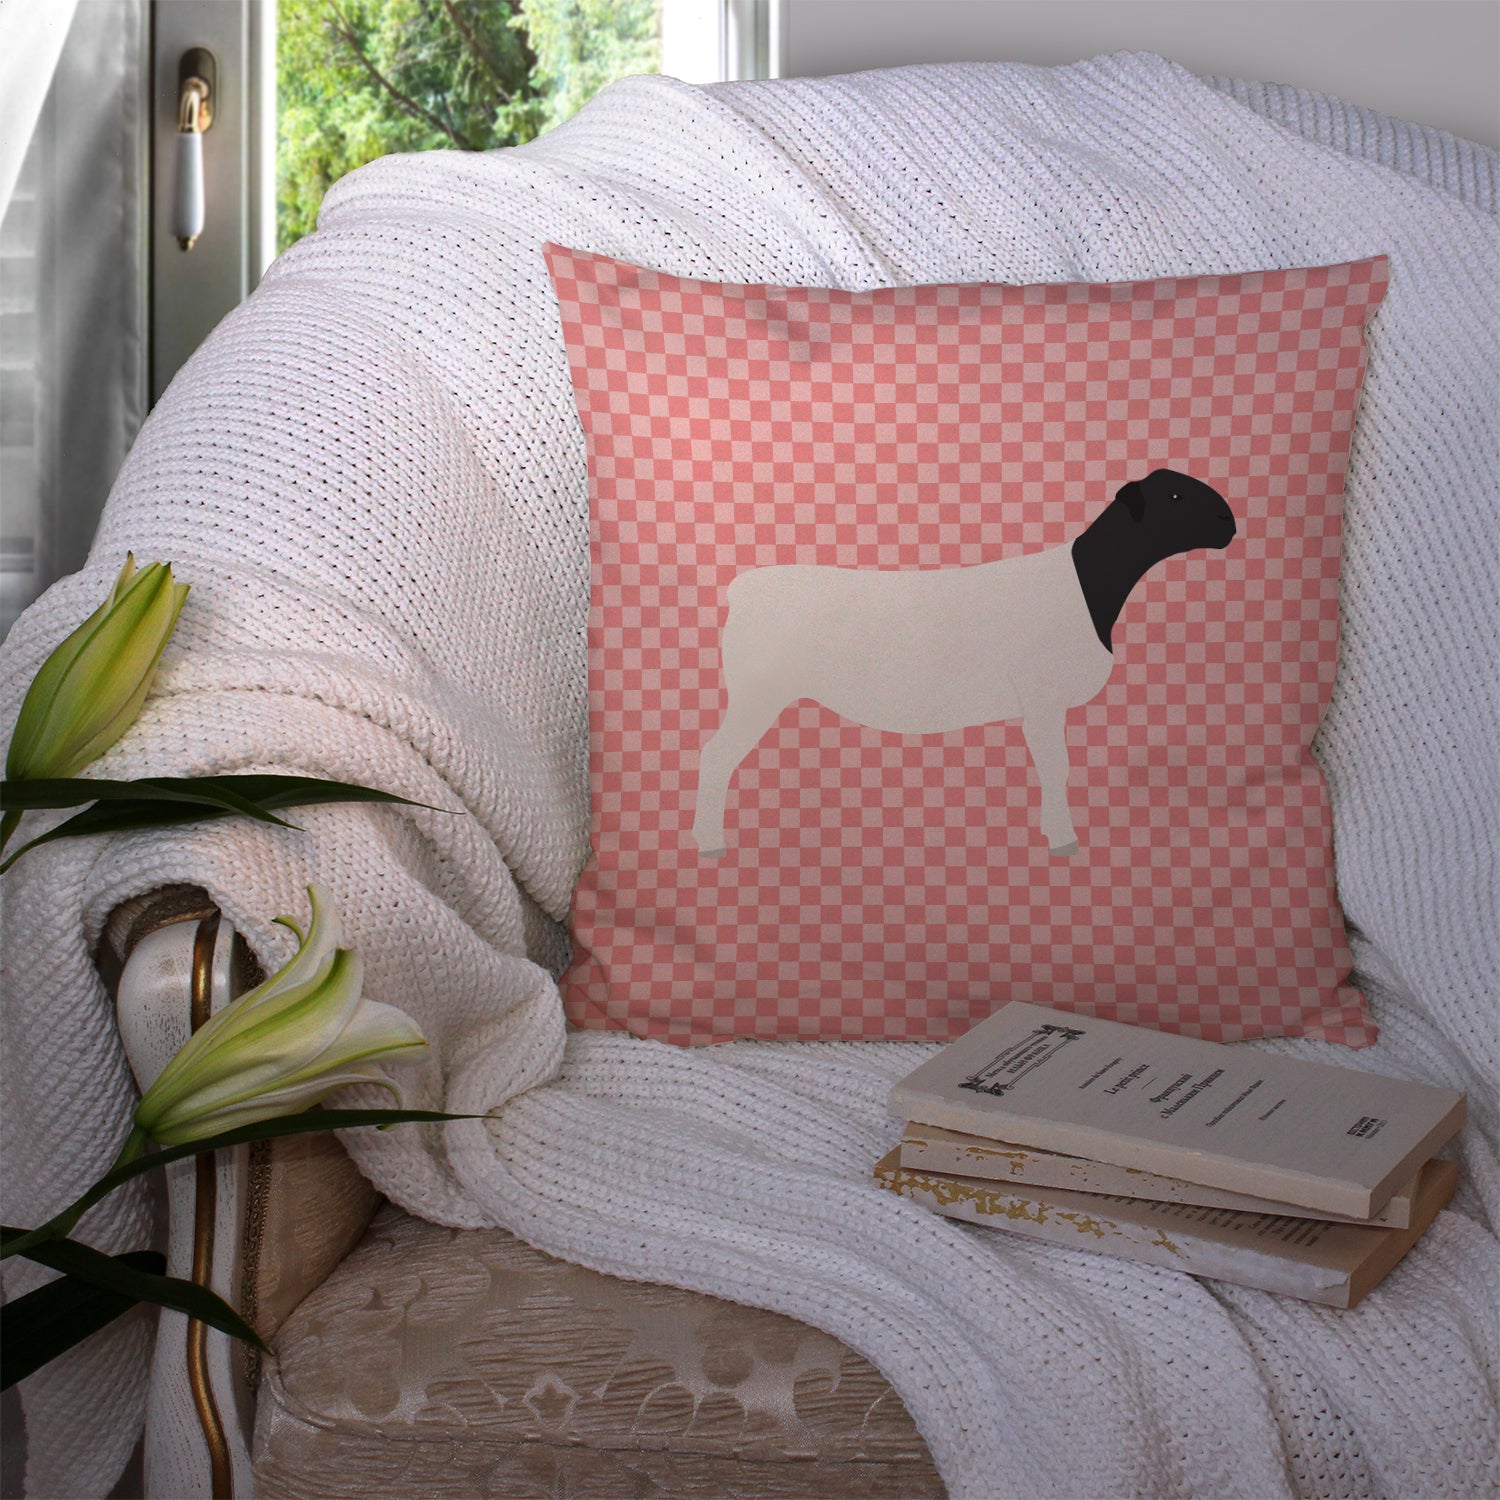 Dorper Sheep Pink Check Fabric Decorative Pillow BB7978PW1414 - the-store.com